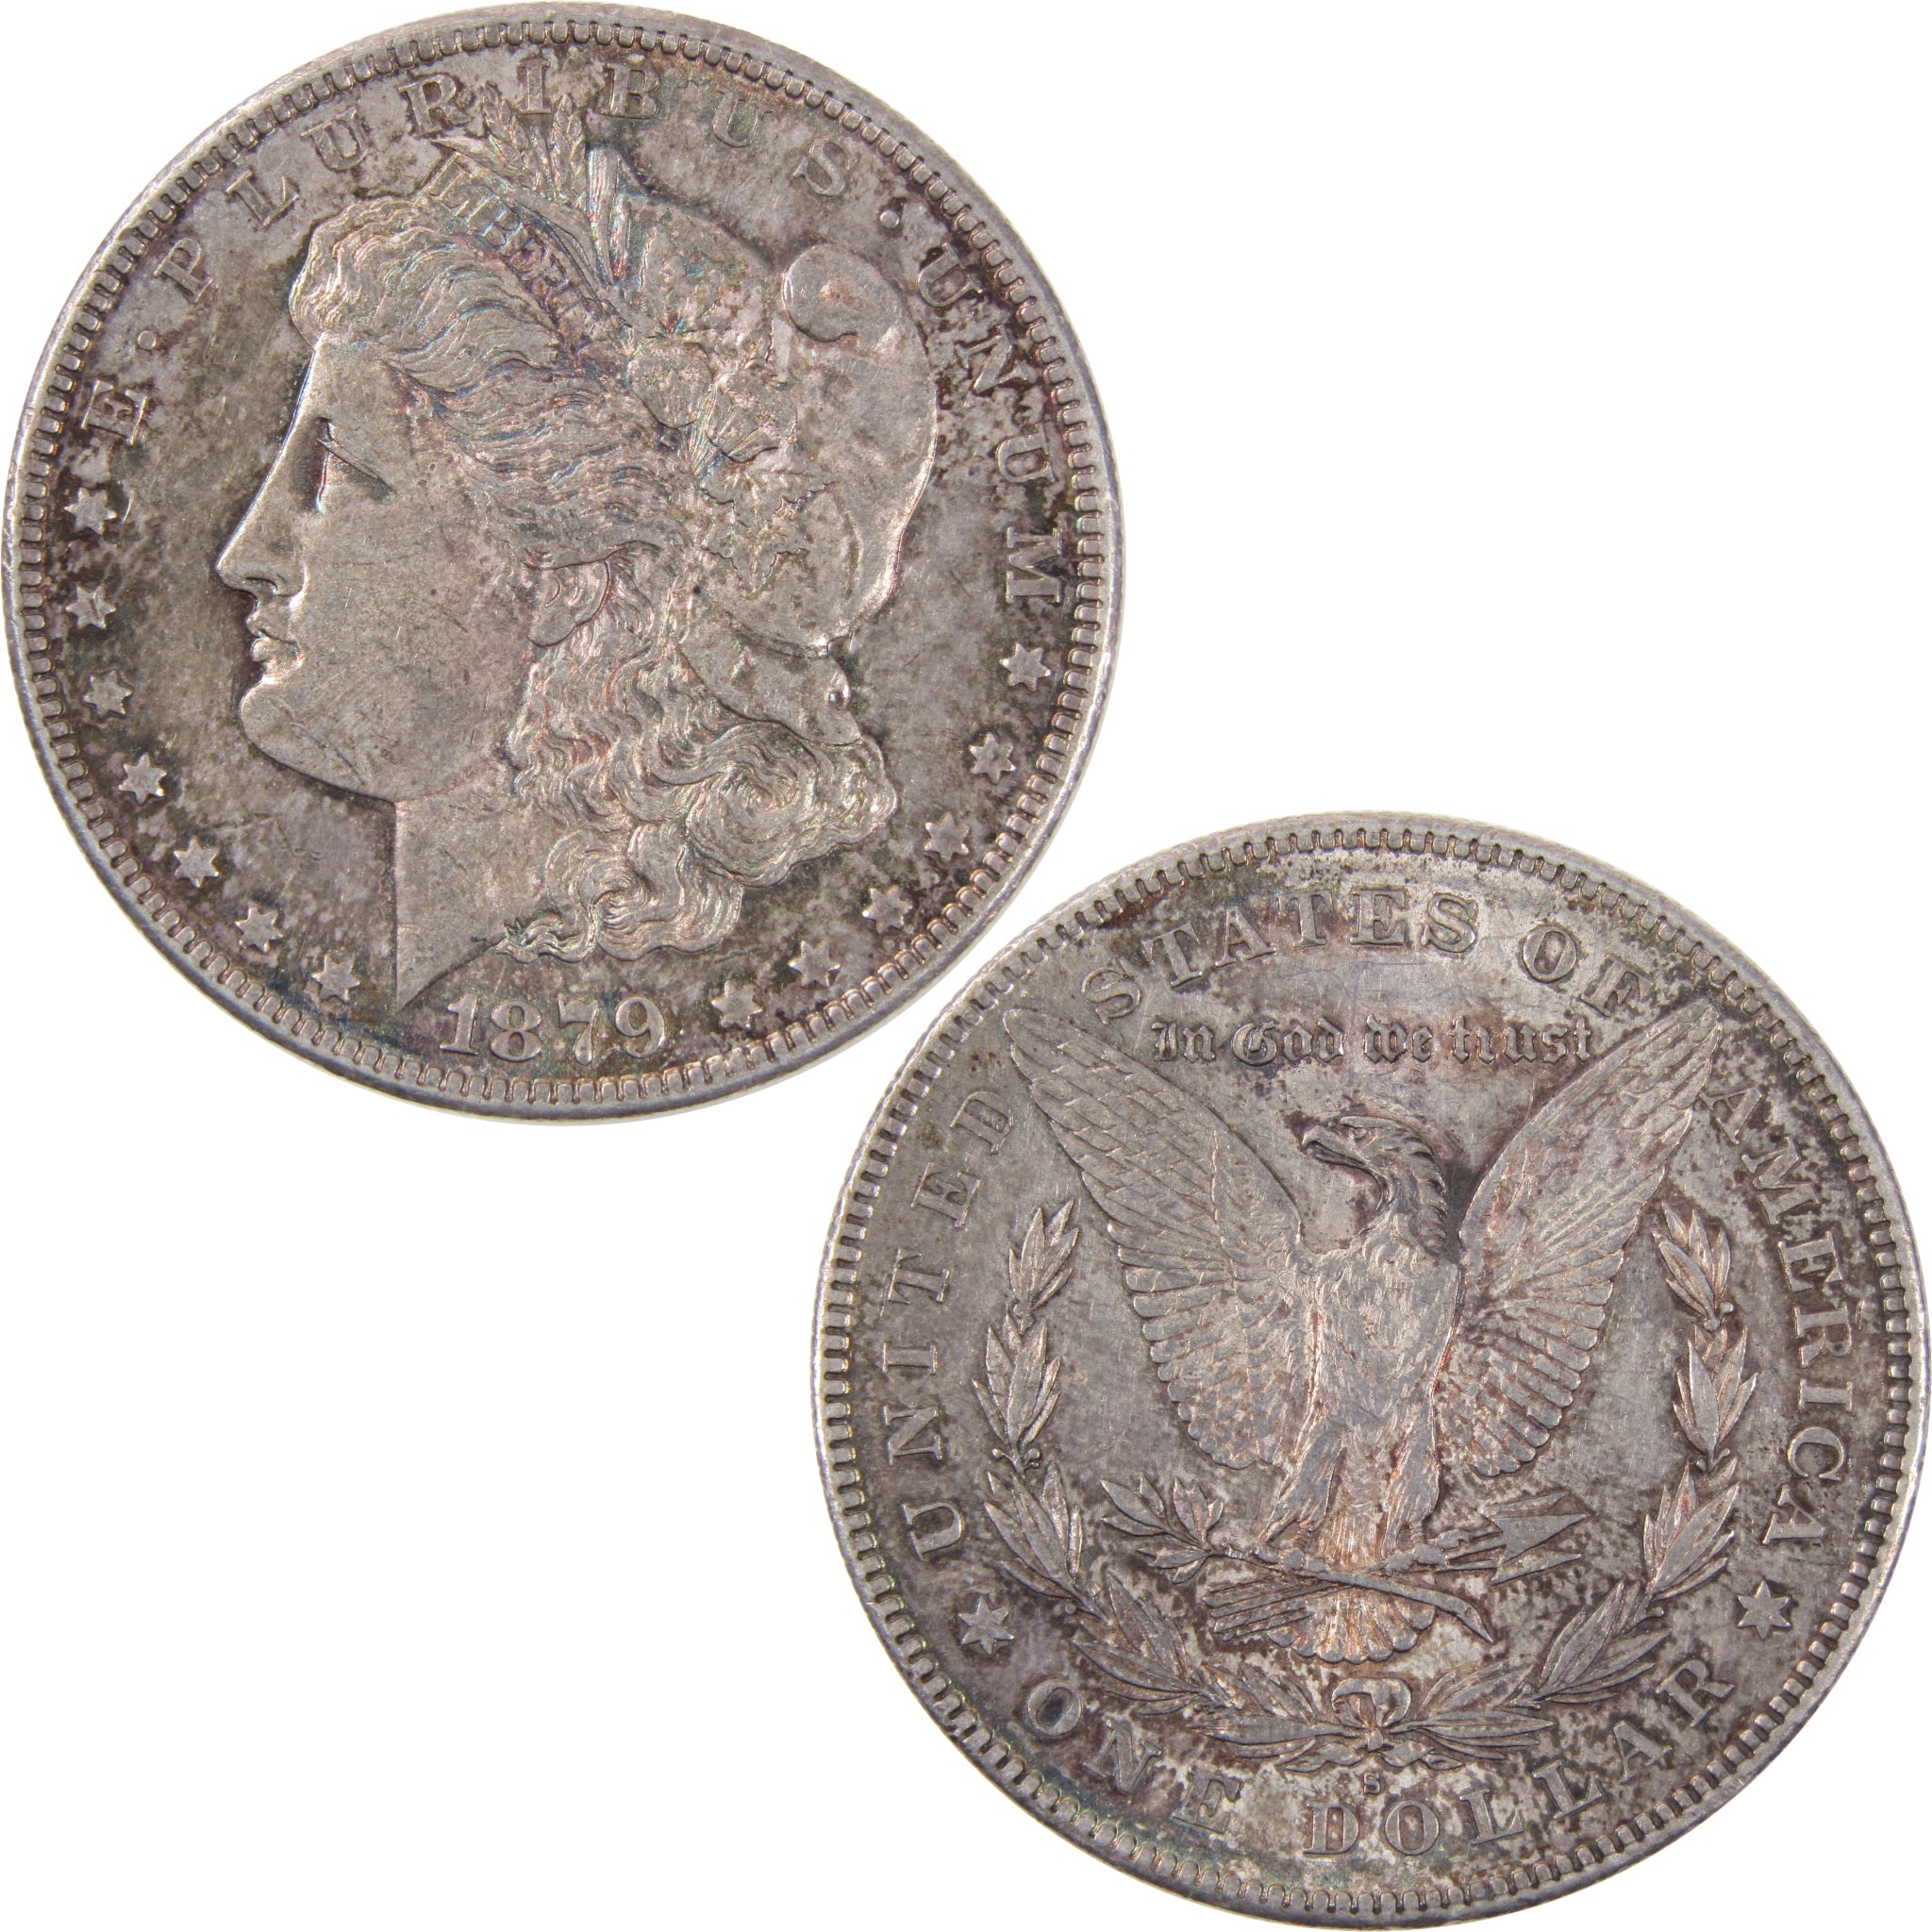 1879 S Rev 78 Morgan Dollar CH AU Choice About Uncirculated SKU:I2494 - Morgan coin - Morgan silver dollar - Morgan silver dollar for sale - Profile Coins &amp; Collectibles